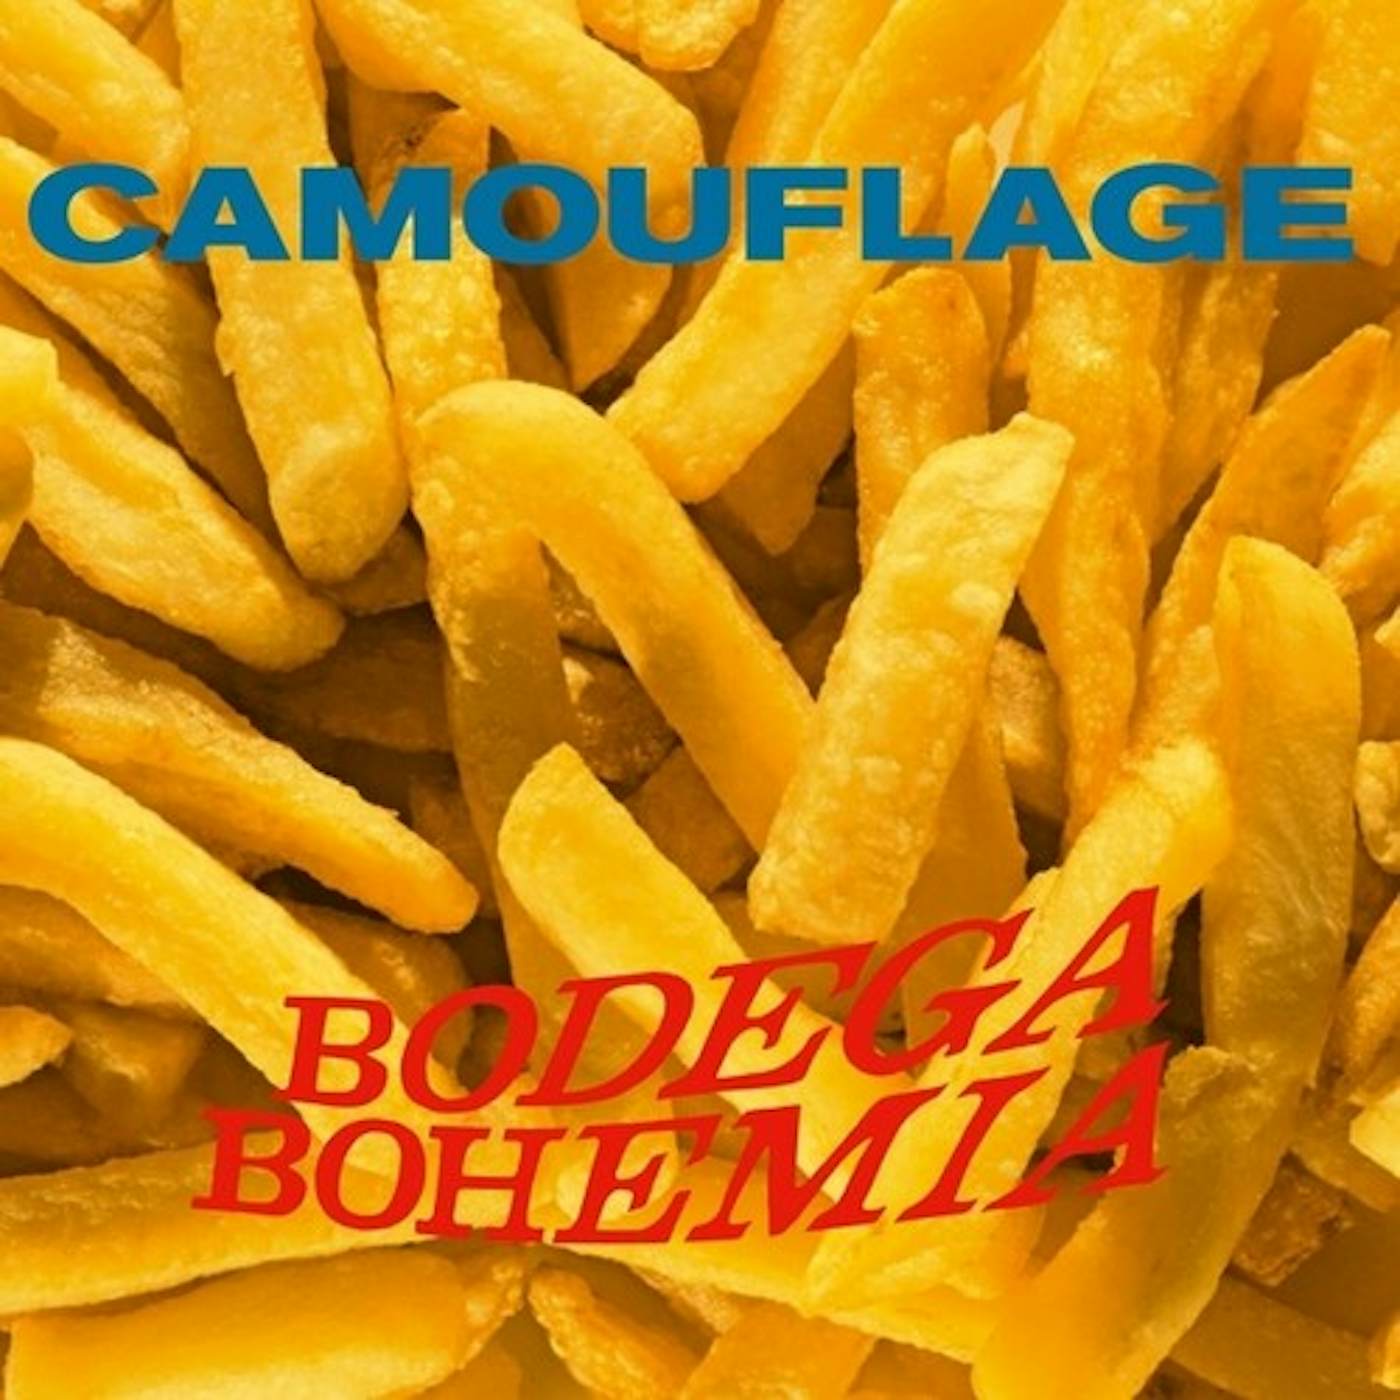 Camouflage BODEGA BOHEMIA CD